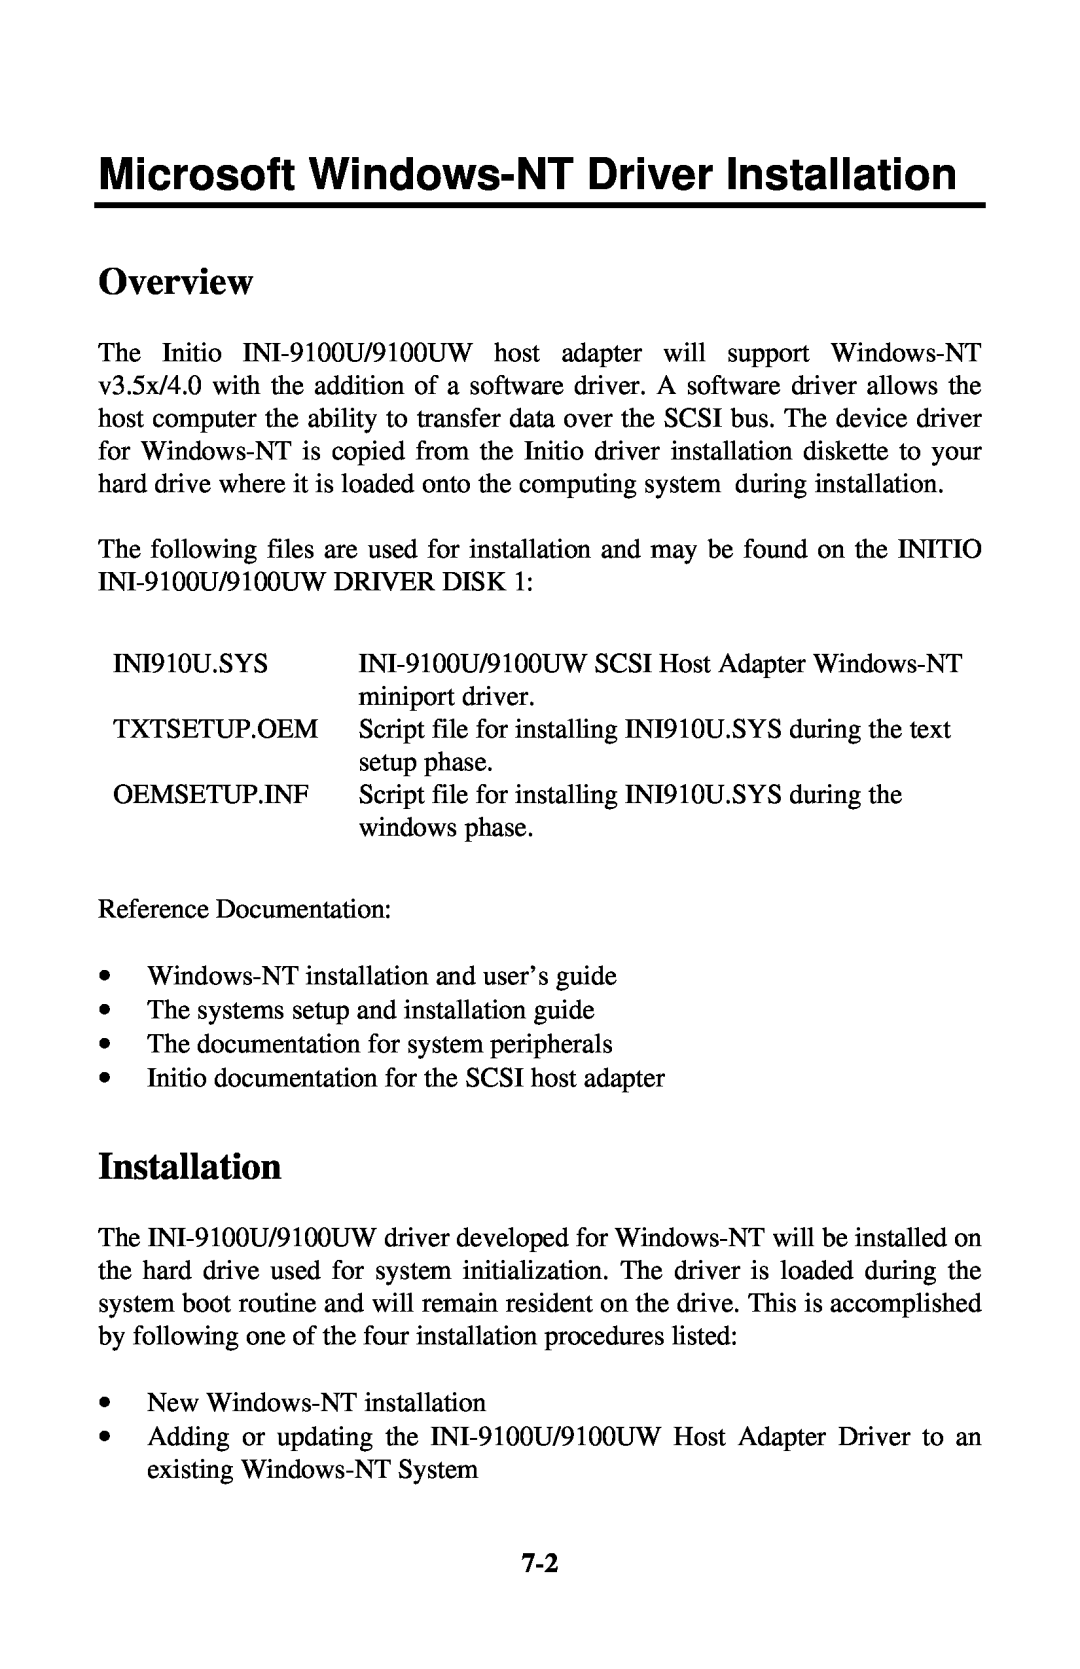 Initio INI-9100UW user manual Microsoft Windows-NT Driver Installation, Overview 